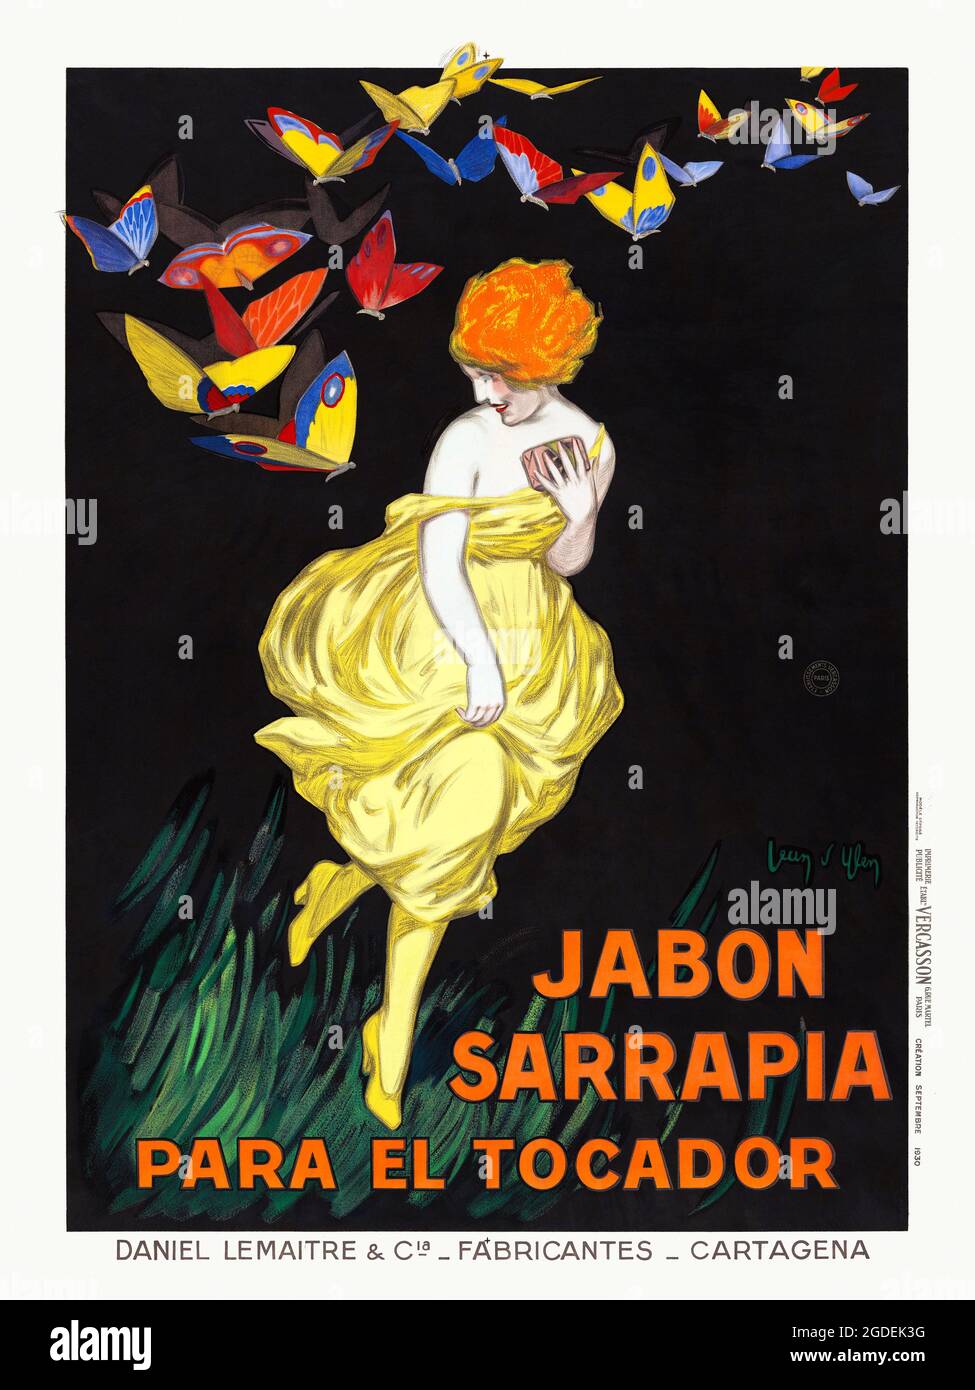 Jabon Sarrapia para el tocador by Jean d'Ylen (1886-1938). Restored vintage  poster published in 1930 in Spain Stock Photo - Alamy